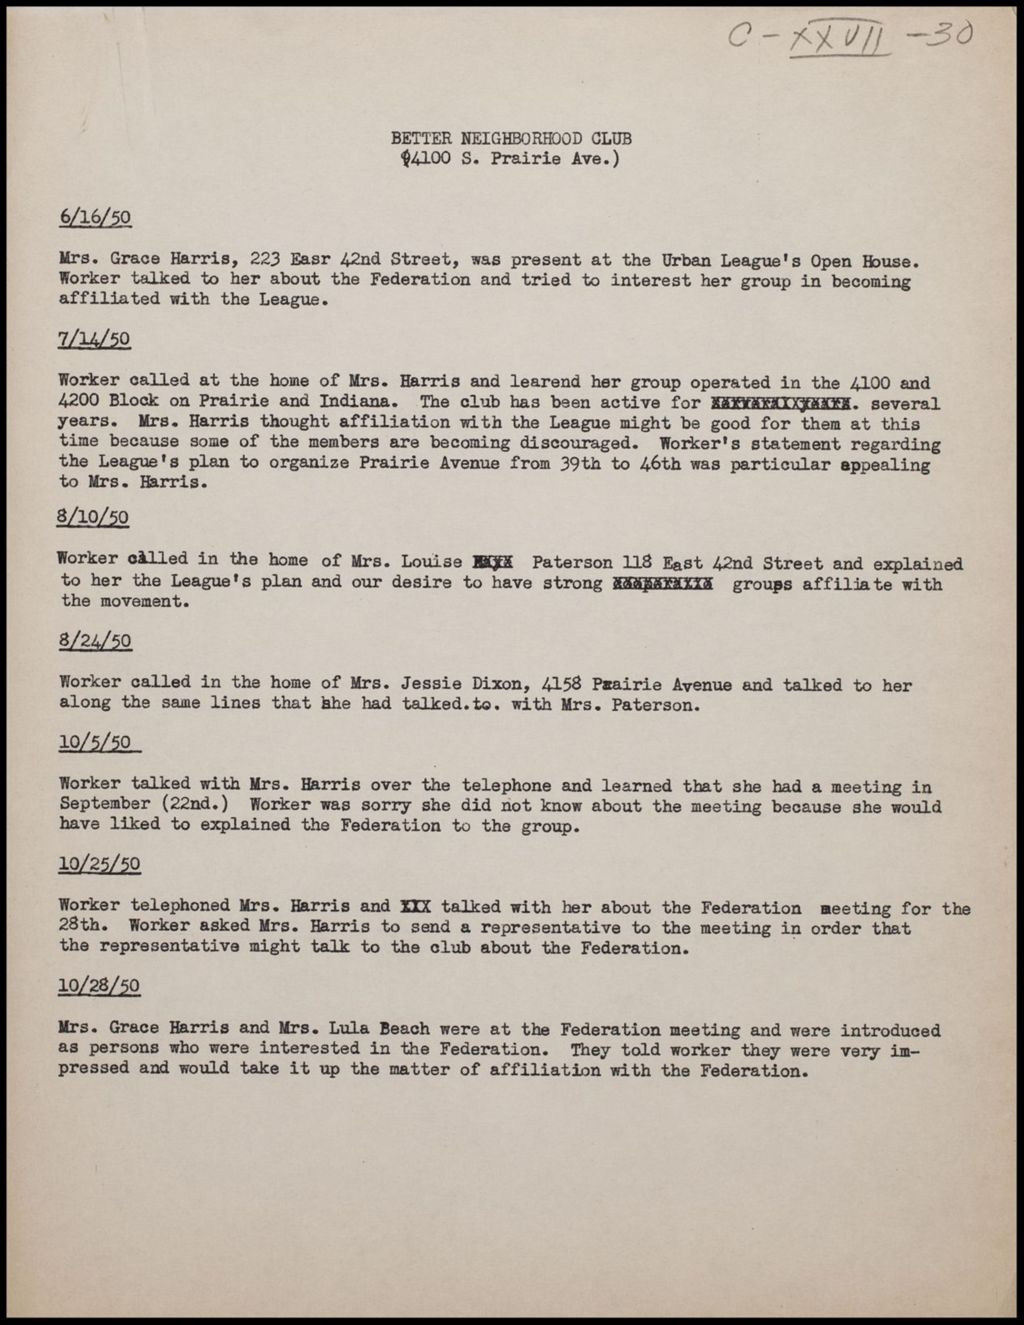 Miniature of Block Club Reports - Parker Council, 1950-1954 (Folder II-2300)